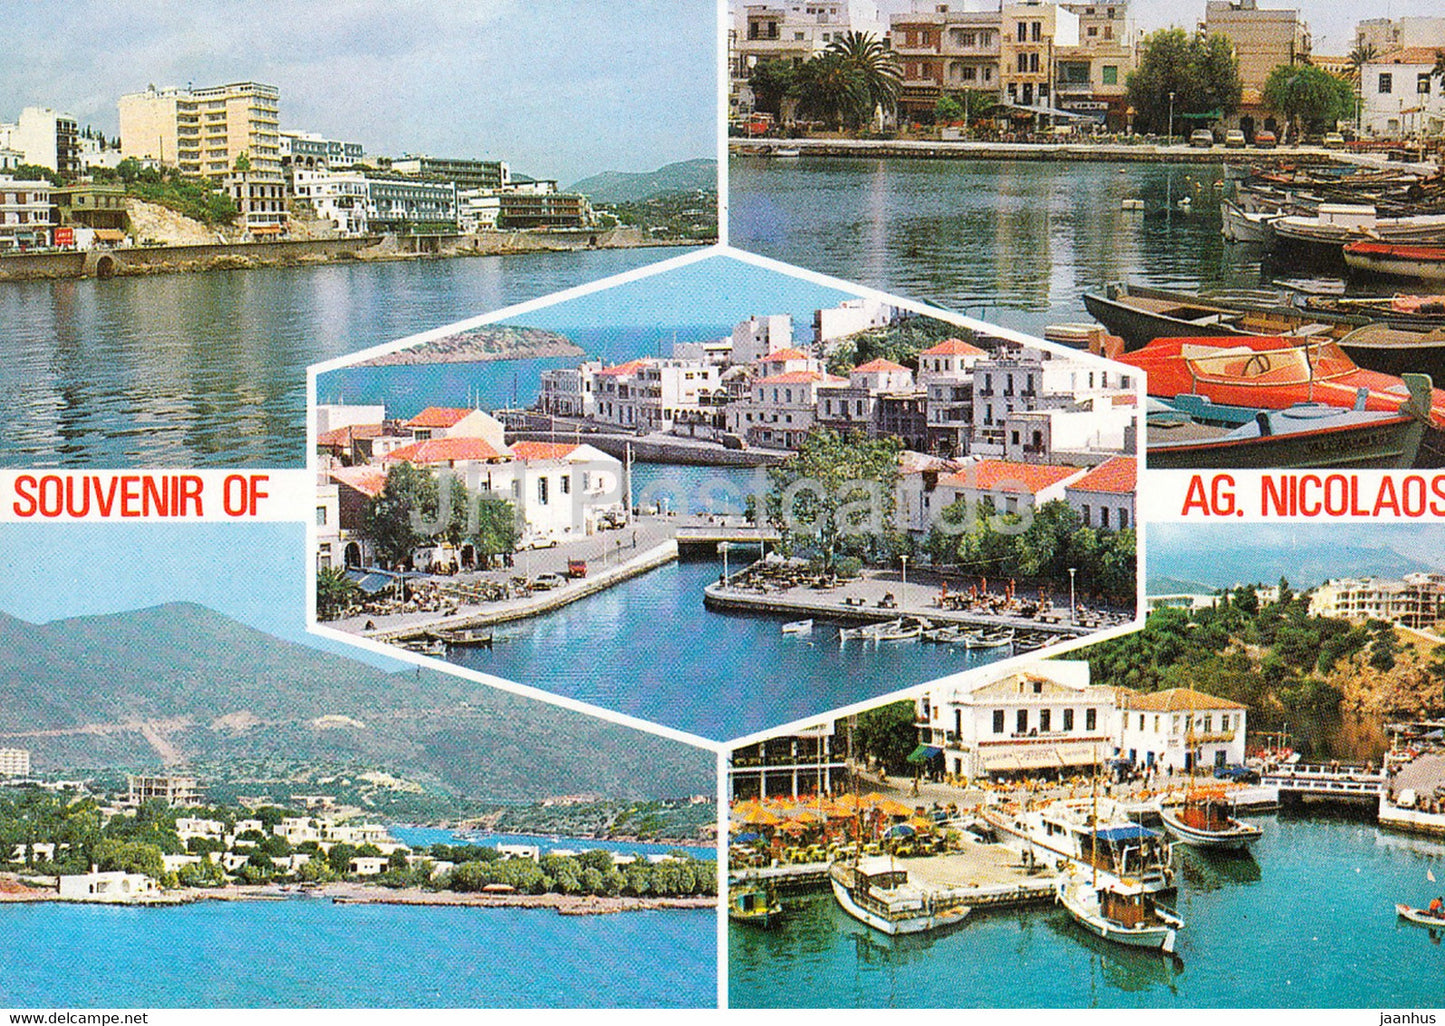 Souvenir of Ag. Nicolaos - boat - multiview - Greece - unused - JH Postcards